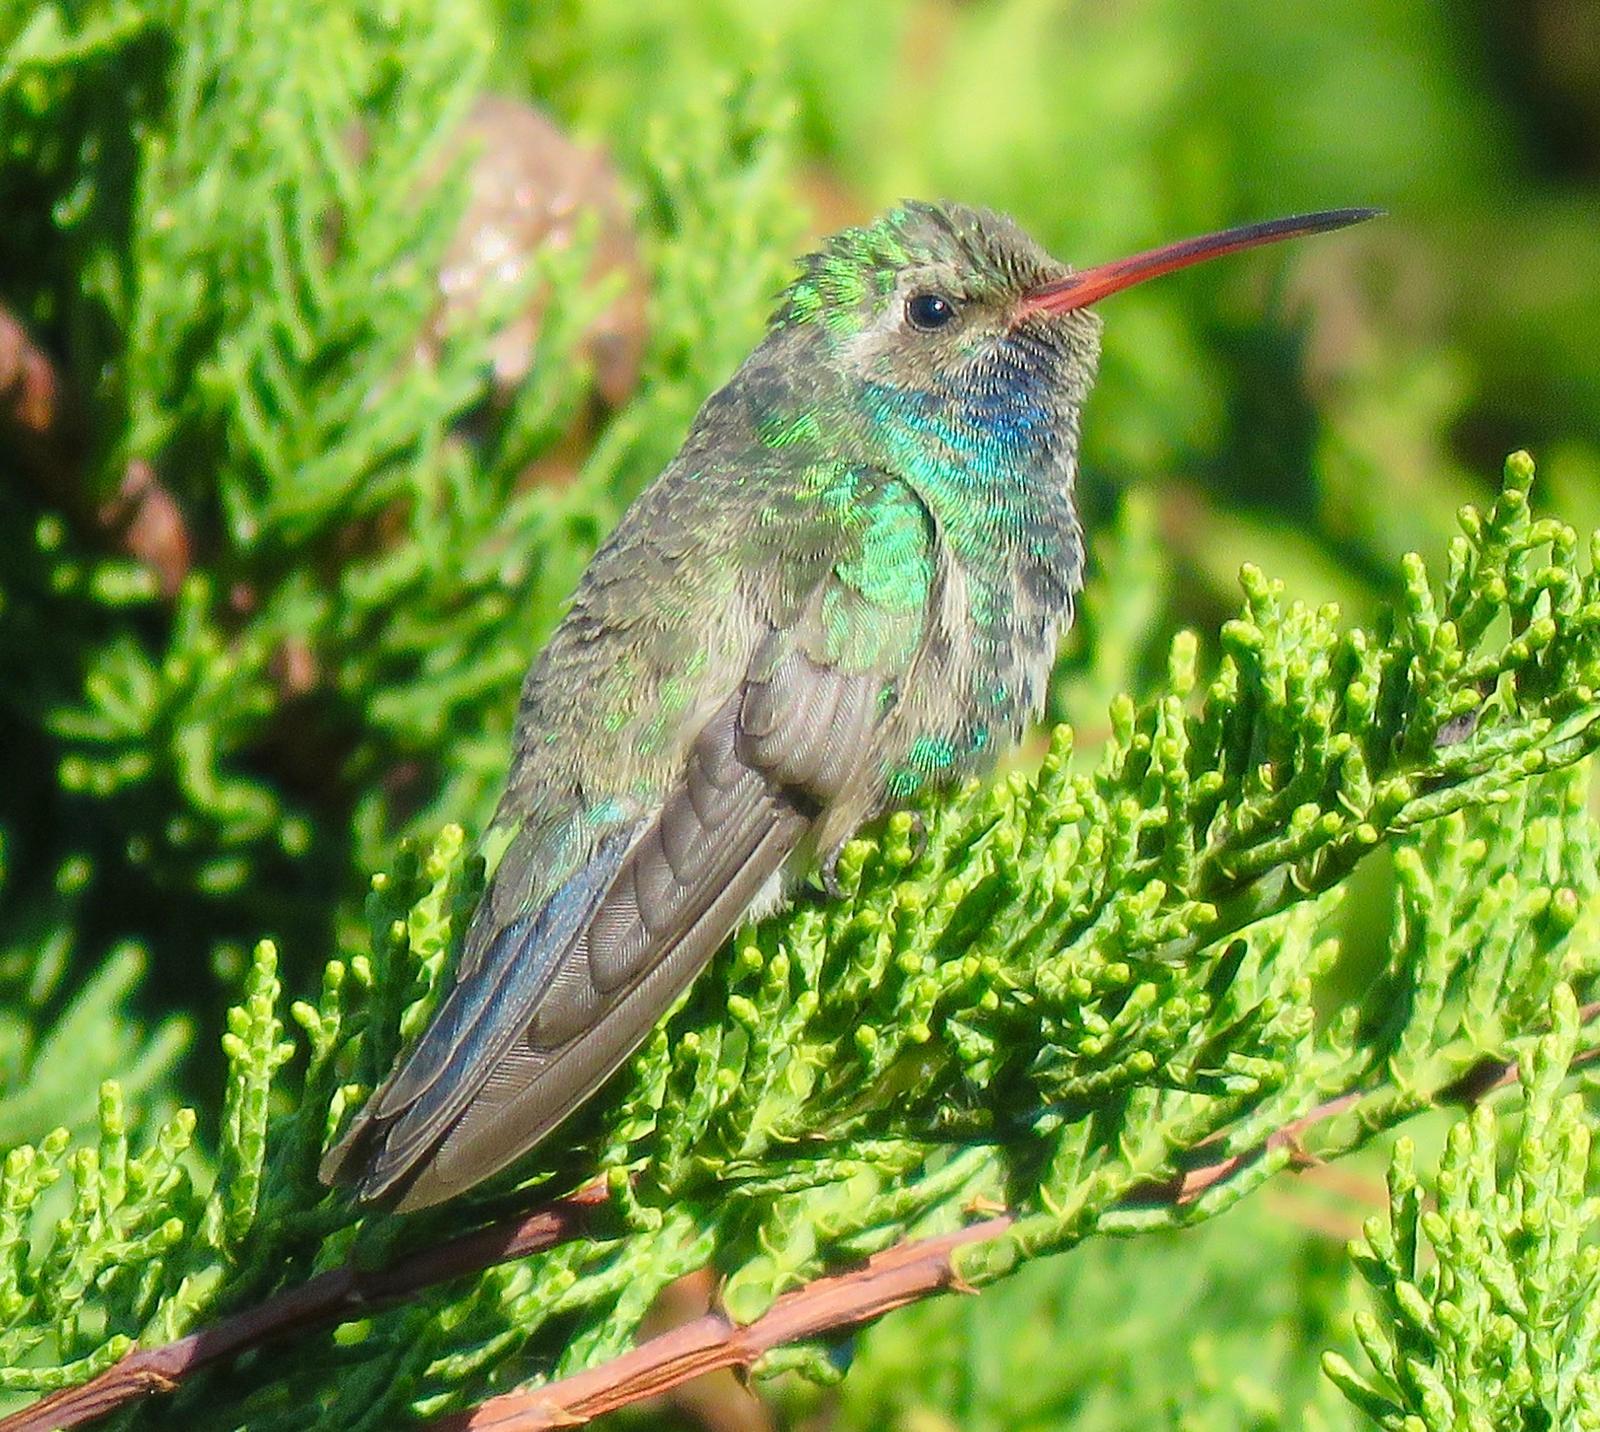 Broad-billed Hummingbird Photo by Don Glasco